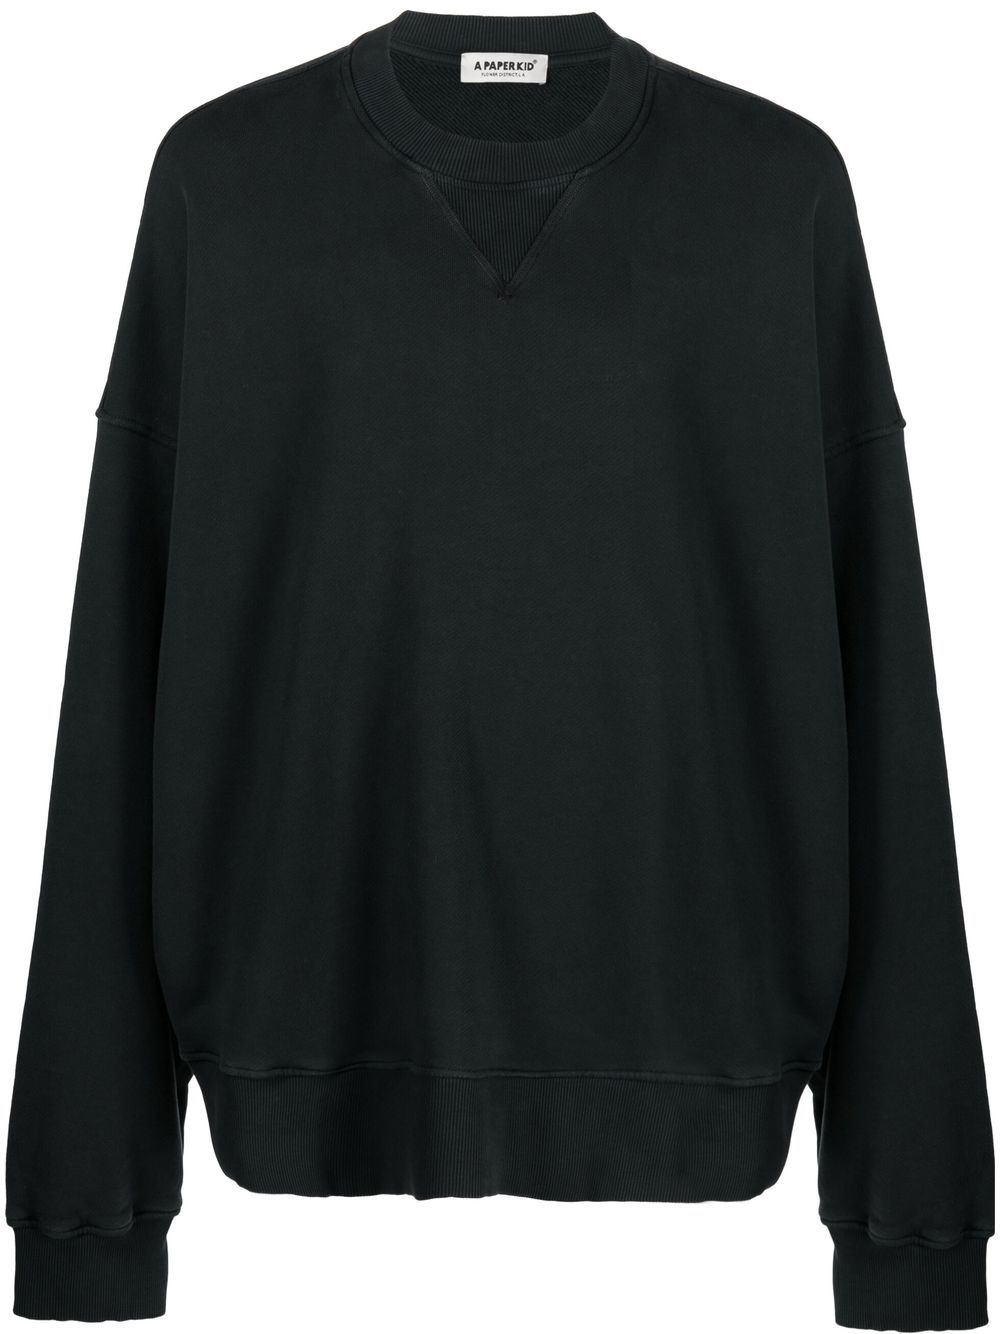 Black slouchy cotton sweatshirt